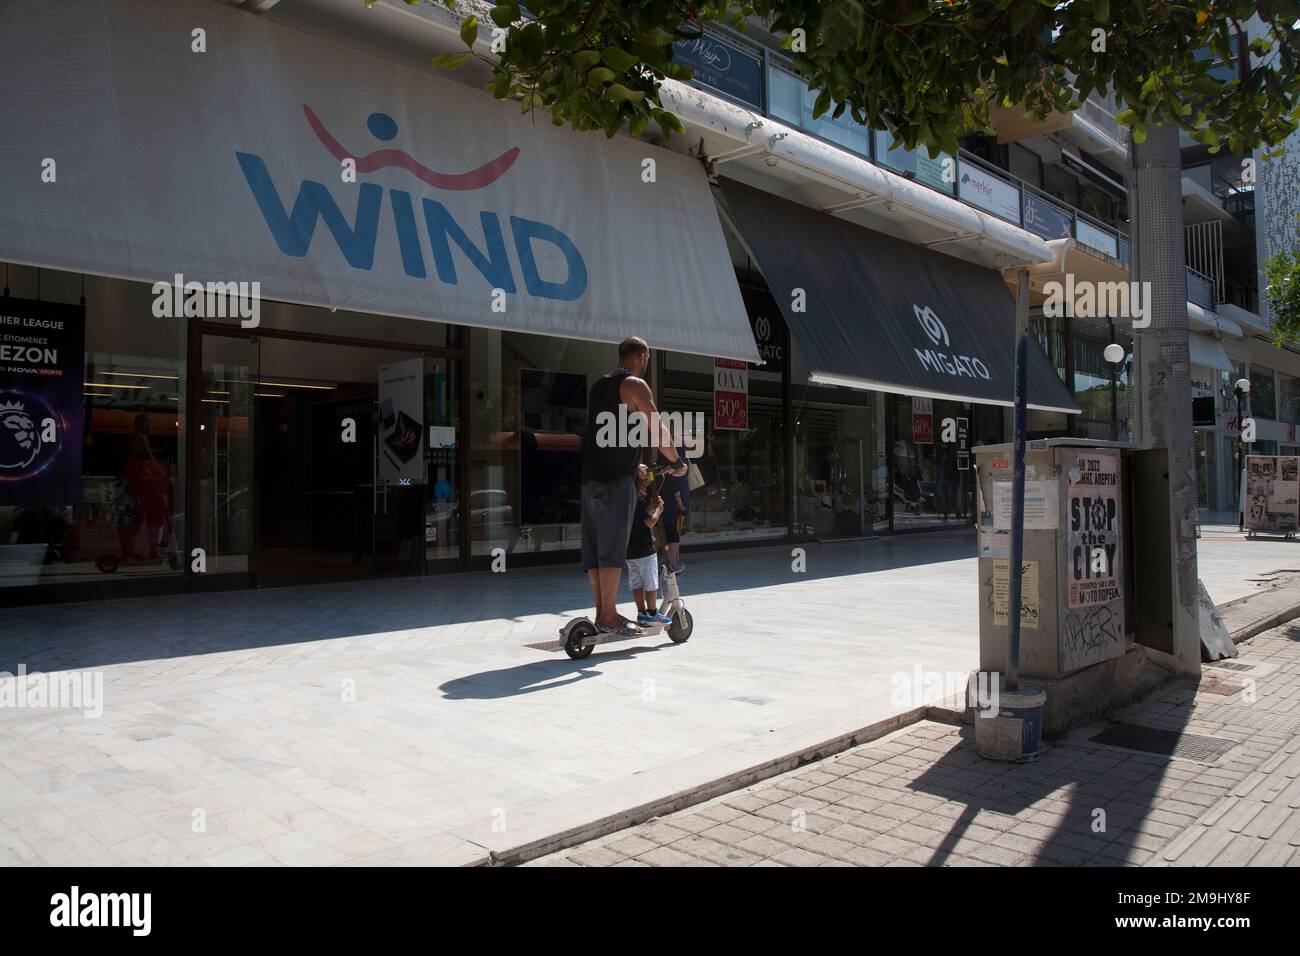 Wind-Handy-Shop glyfada athen griechenland Stockfoto